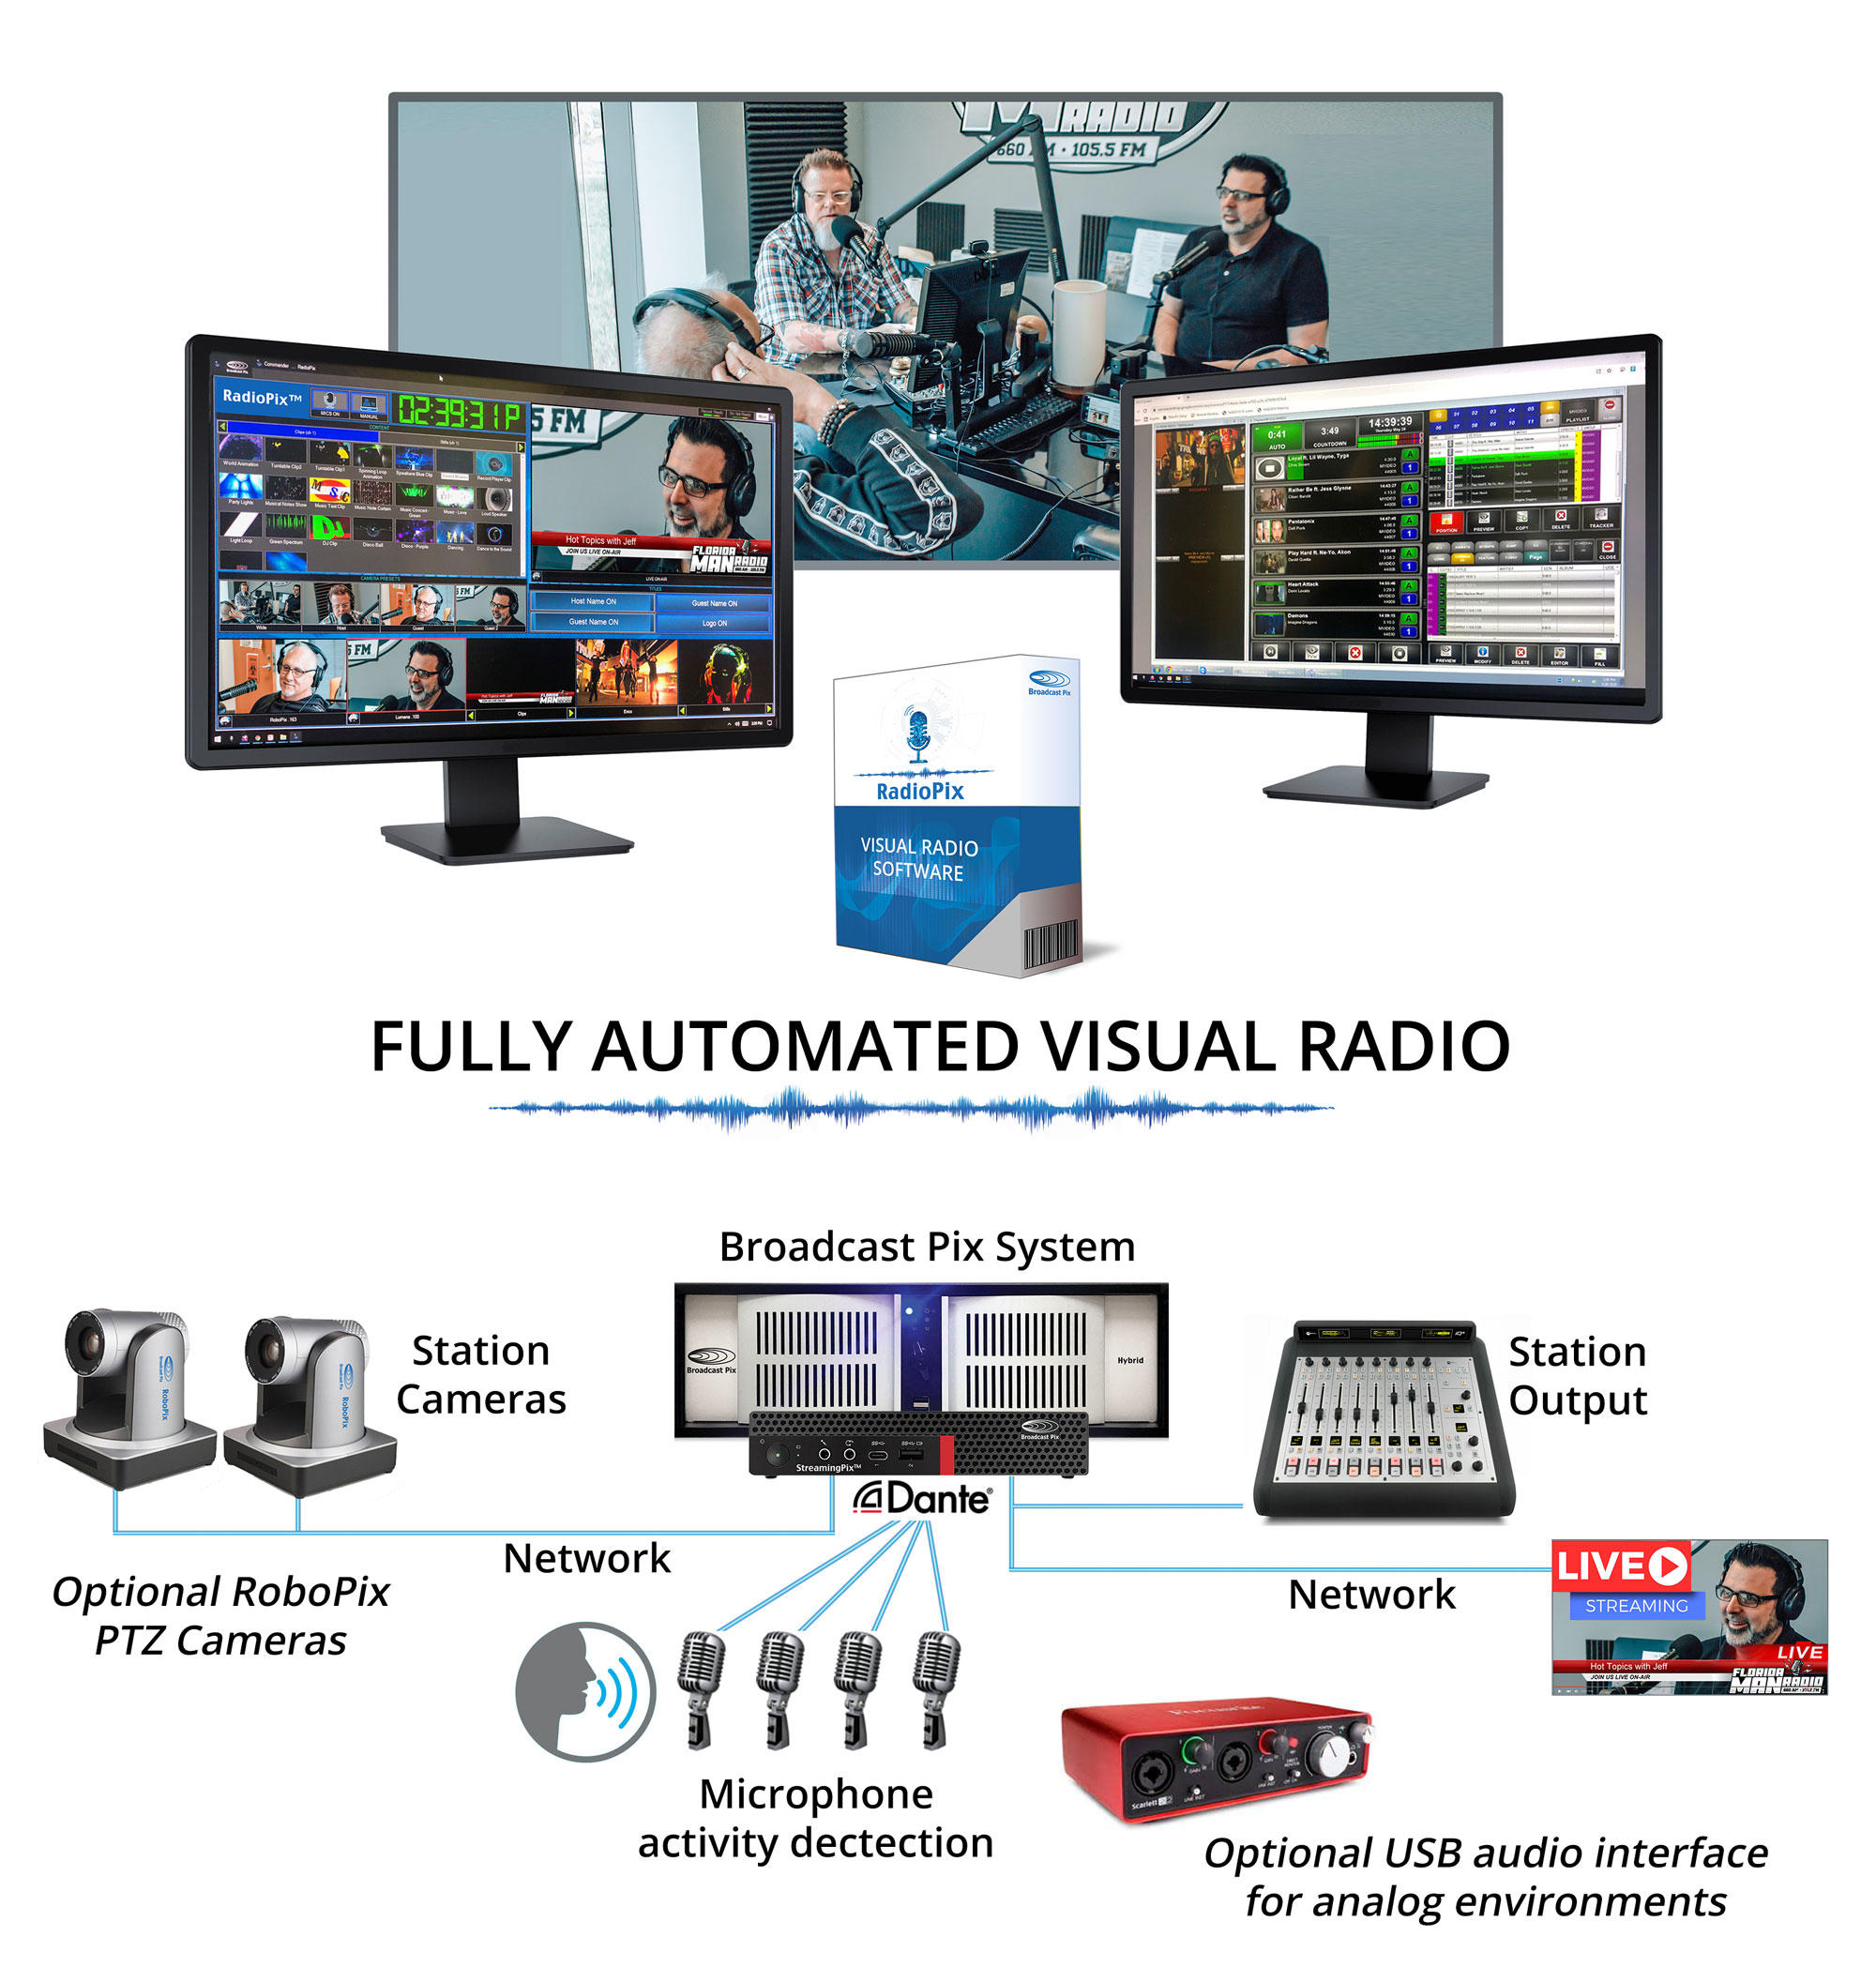 Broadcast Pix RadioPix Visual Radio Systems for Radio Broadcasting and Streaming